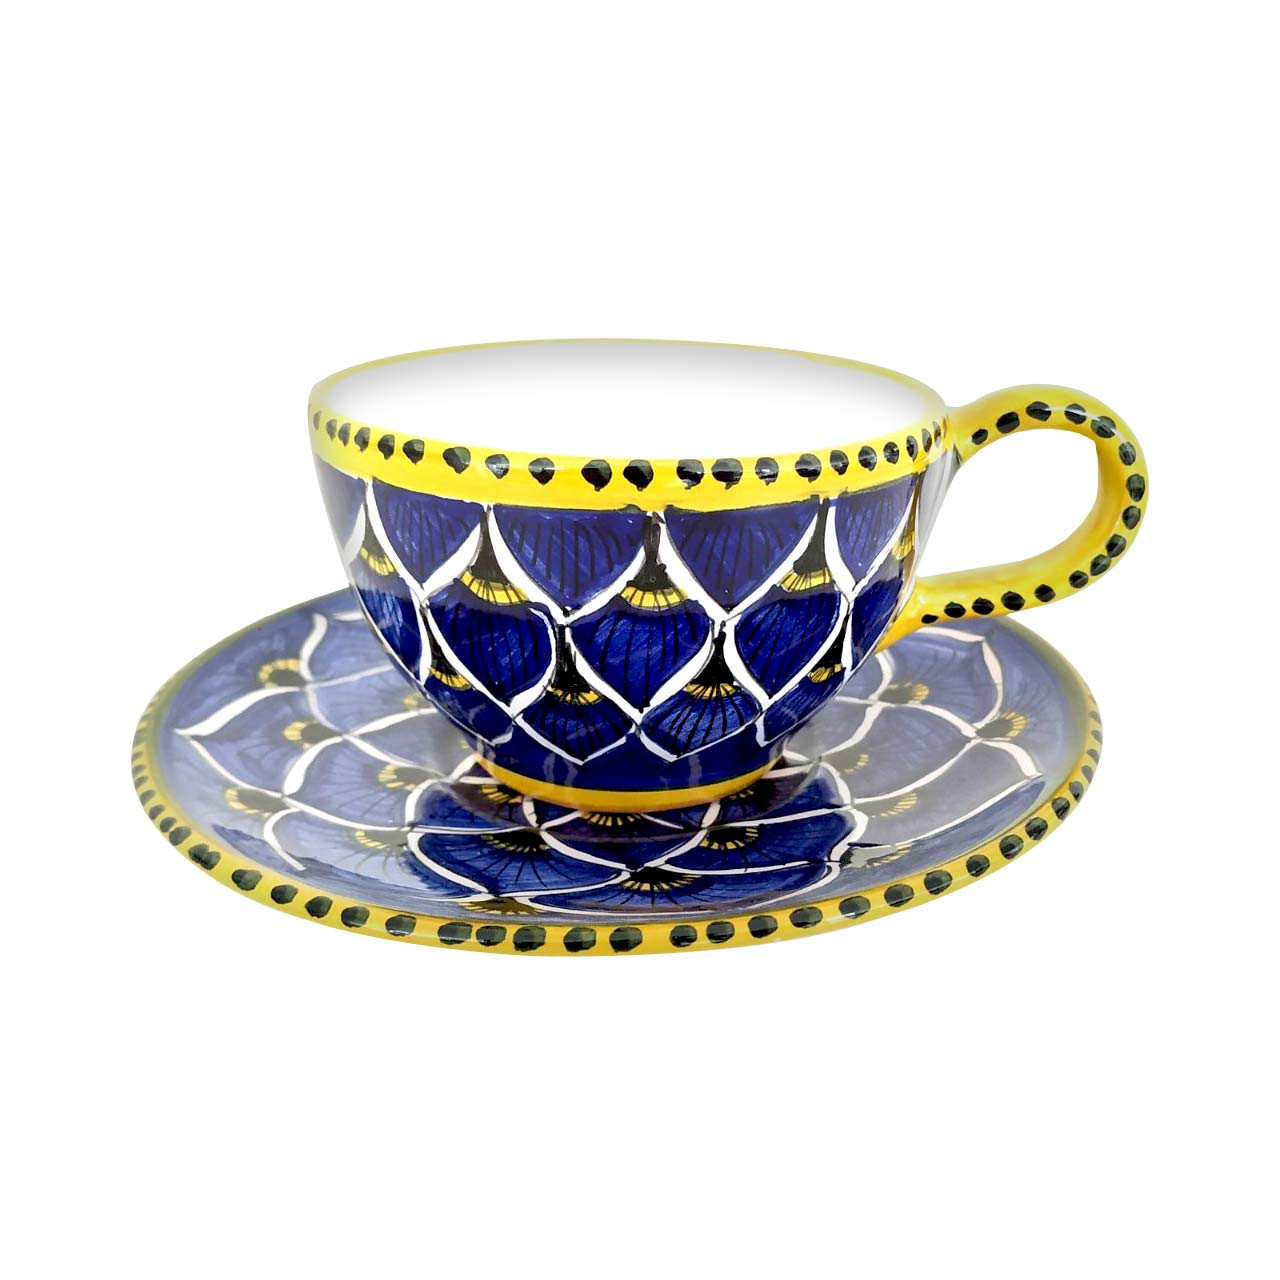 https://cdn11.bigcommerce.com/s-ukqi7wk1fh/images/stencil/1280x1280/products/1609/4197/Pottery-store-tea-cup-mod-ceramics__83652.1603042575.jpg?c=2